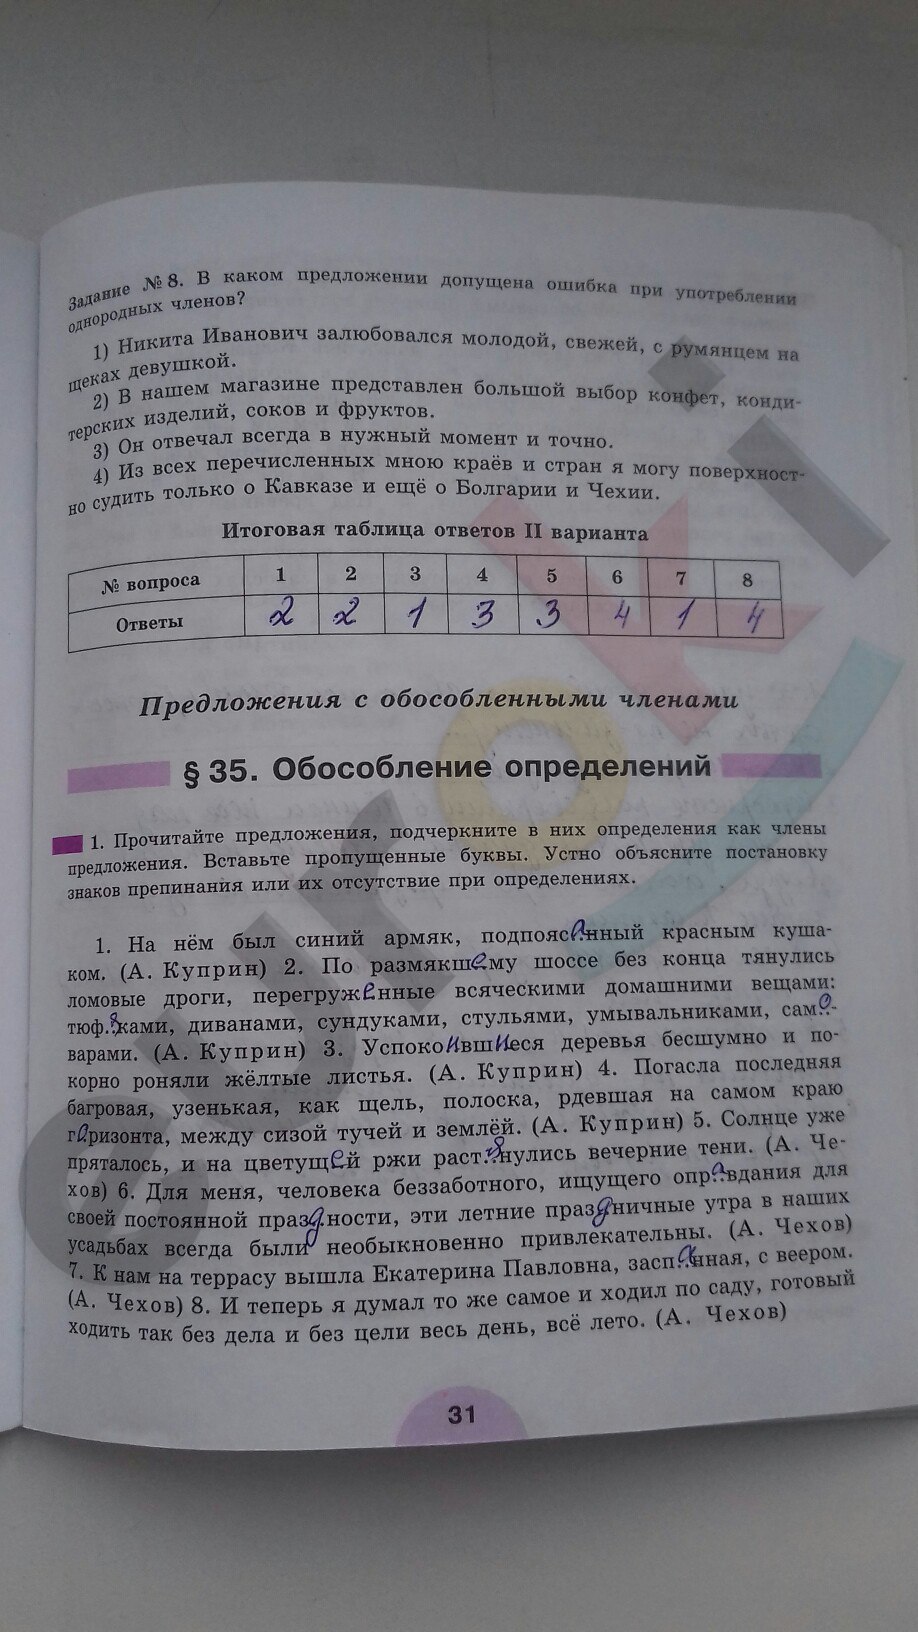 гдз 8 класс рабочая тетрадь часть 2 страница 31 русский язык Рыбченкова, Александрова